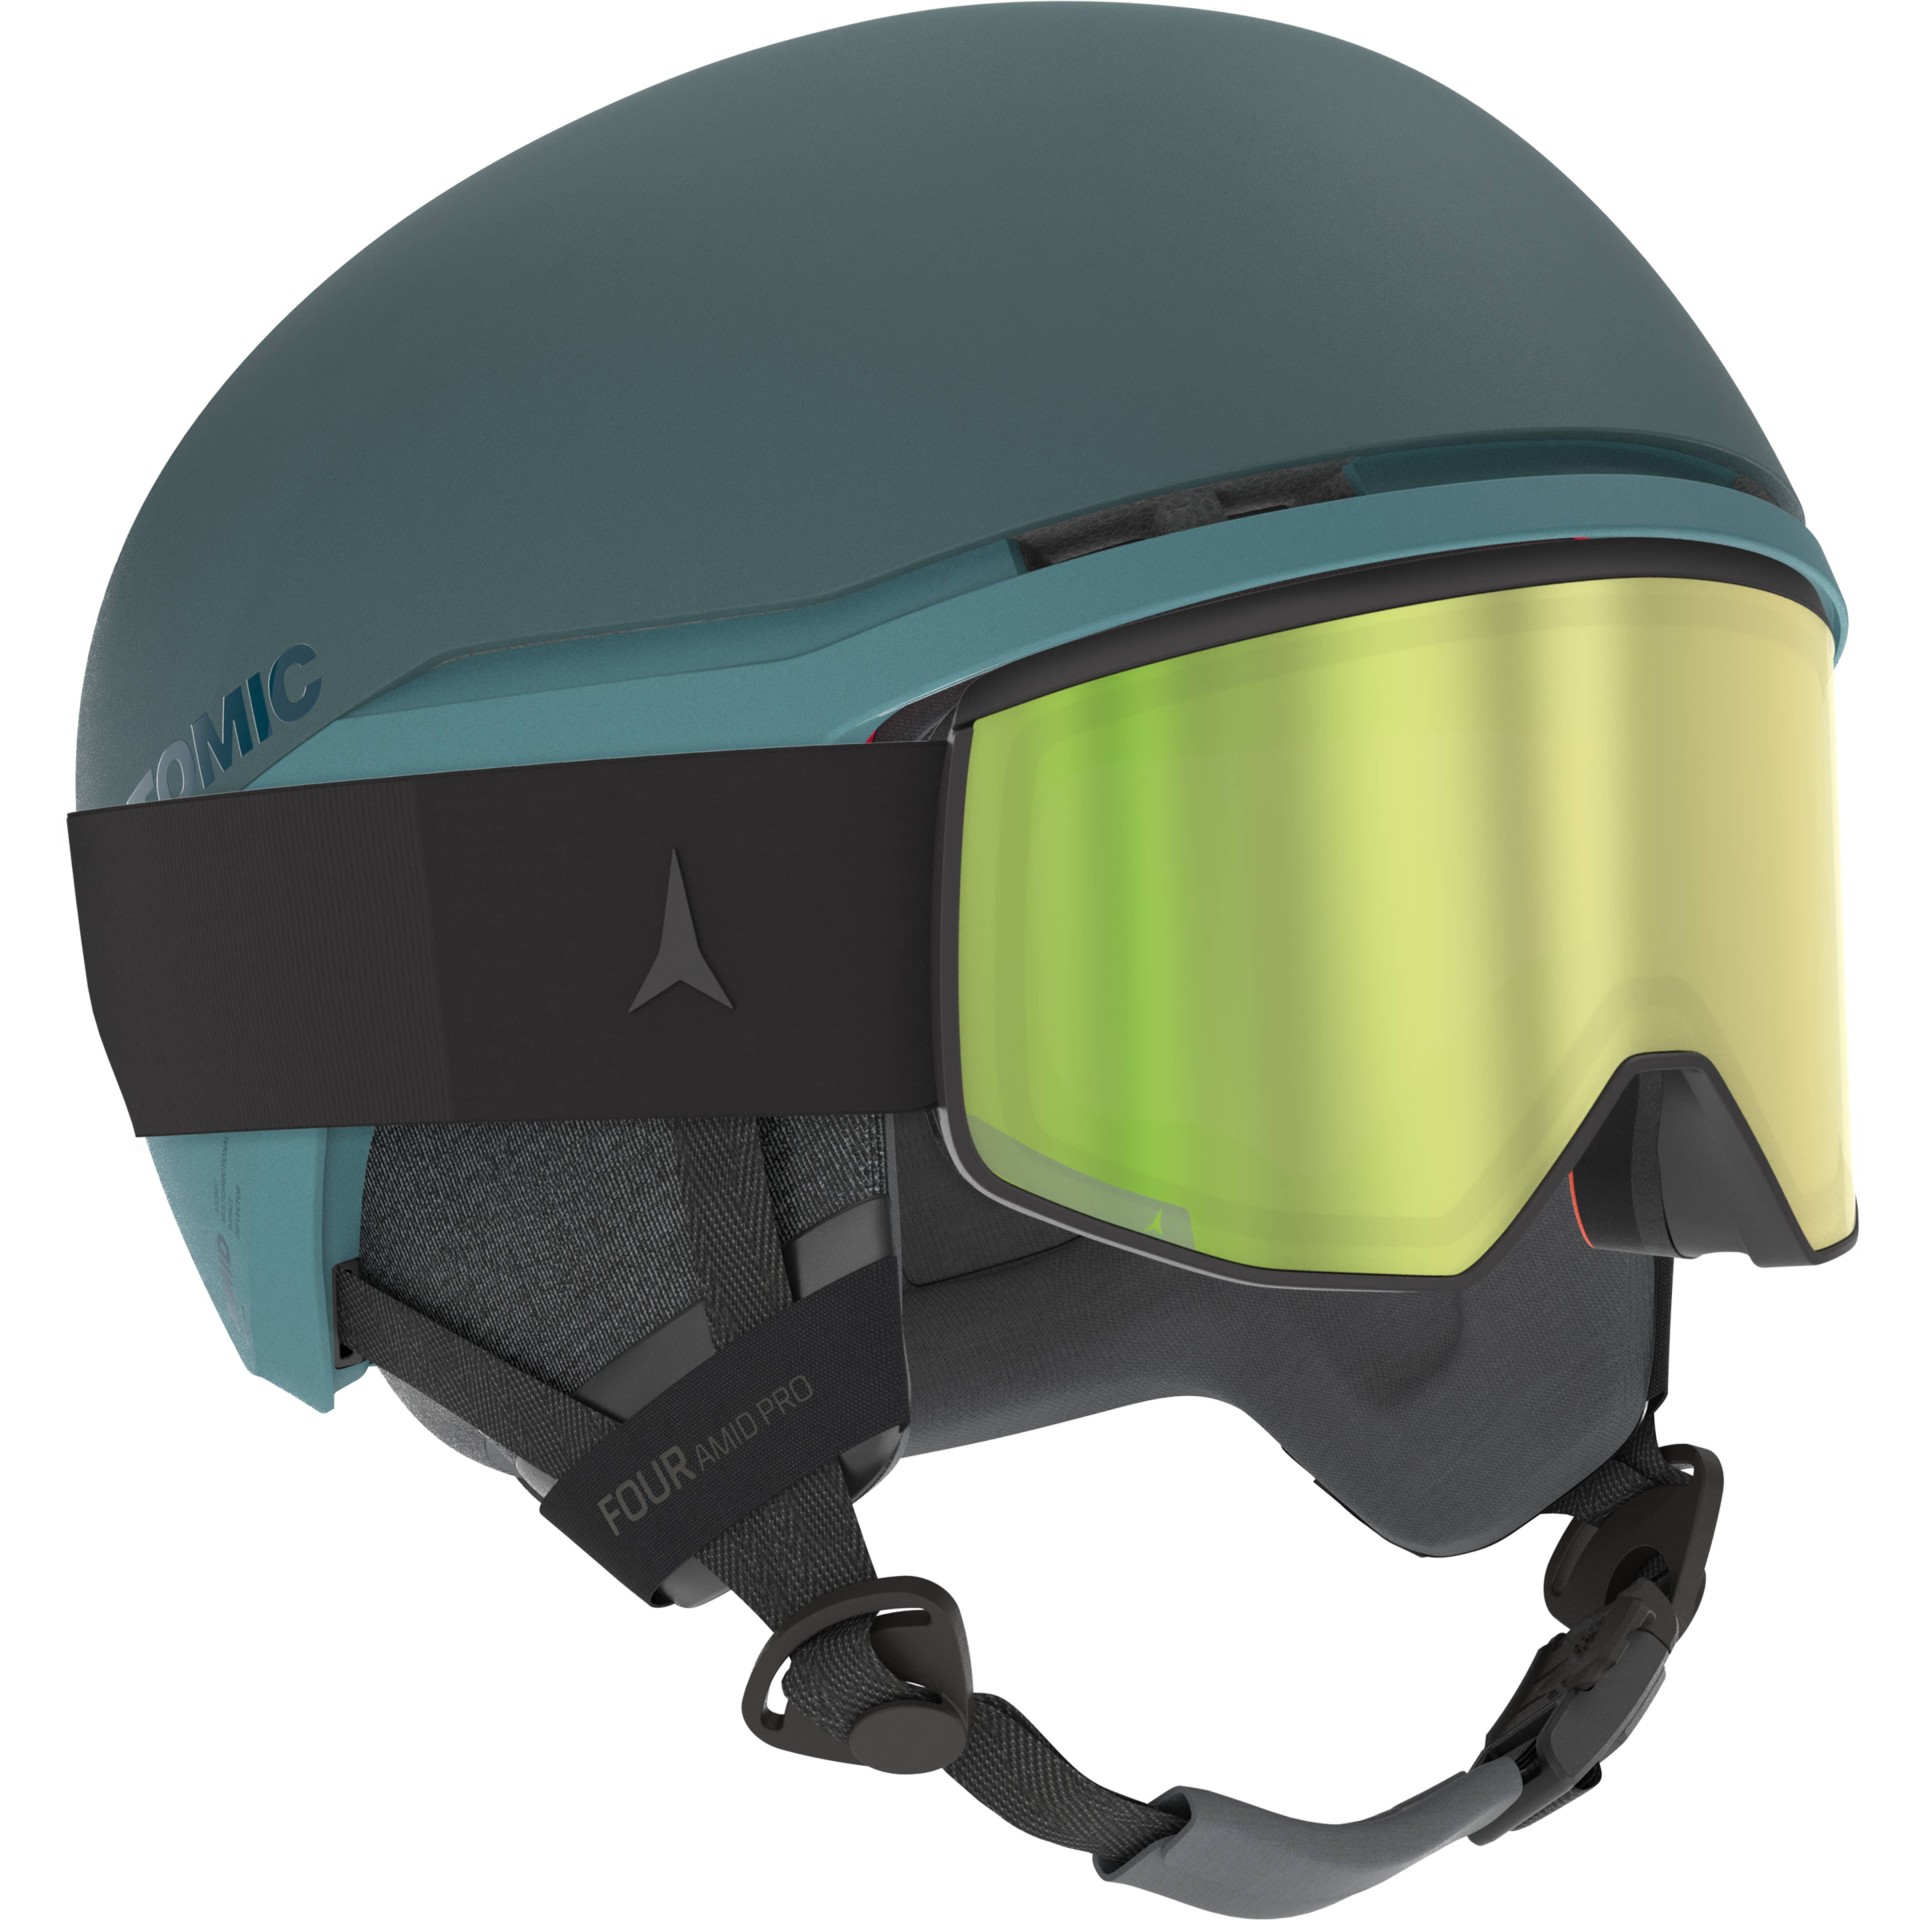 Atomic Four Amid Pro Ski/Snowboard Helmet